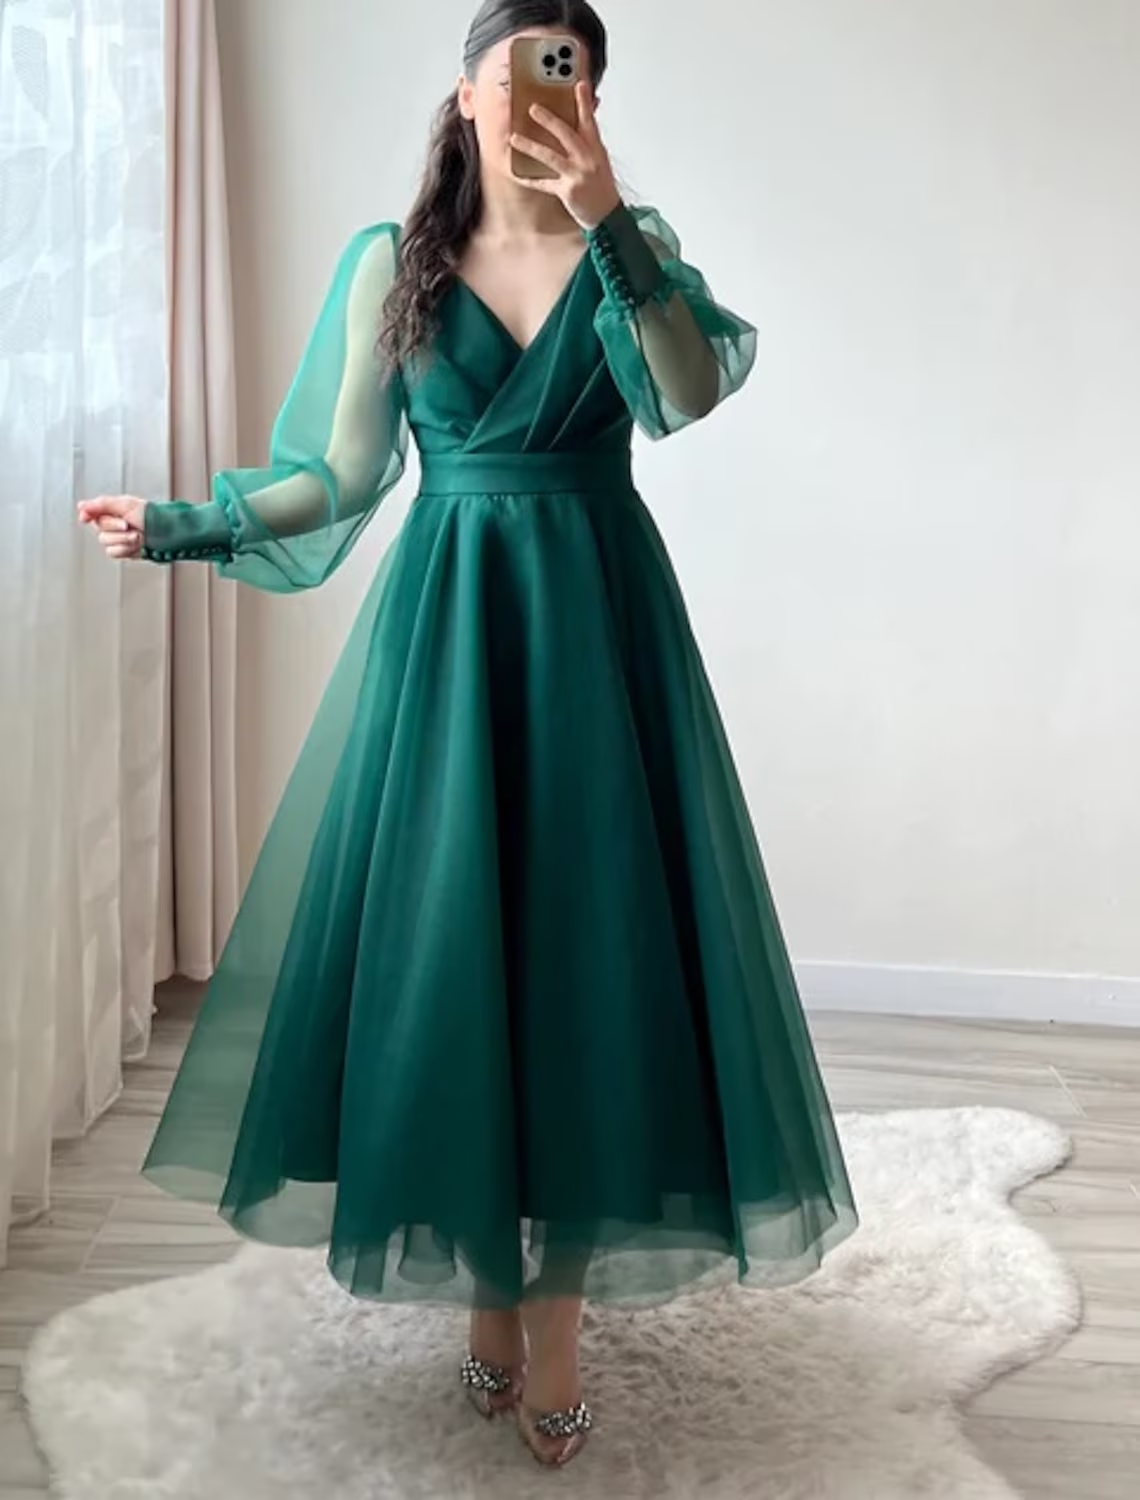  vbnergoie Womens Long Sleeve Button Up Elegant Solid Color  Single Breasted Casual Loose Long Petite Tea Length Dress Green : ביגוד,  נעליים ותכשיטים